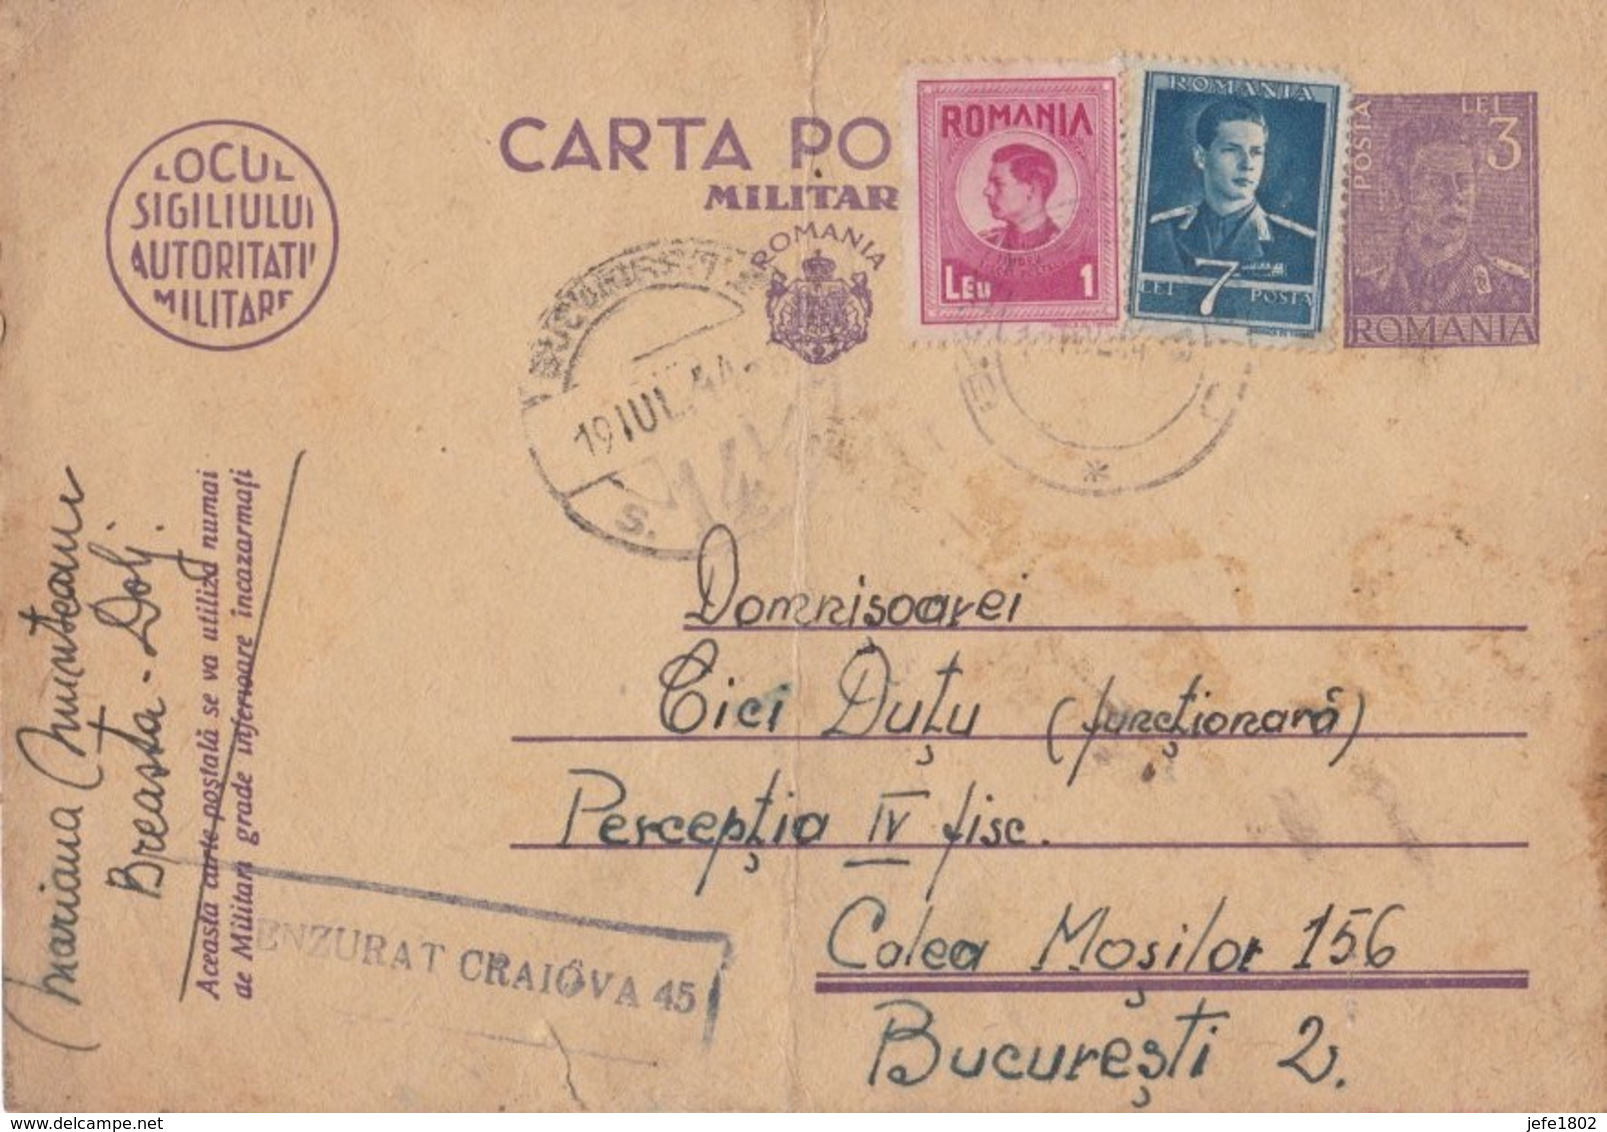 WO II - Carta Postala - Militara Gratuita - 11 Lei - Franquicia